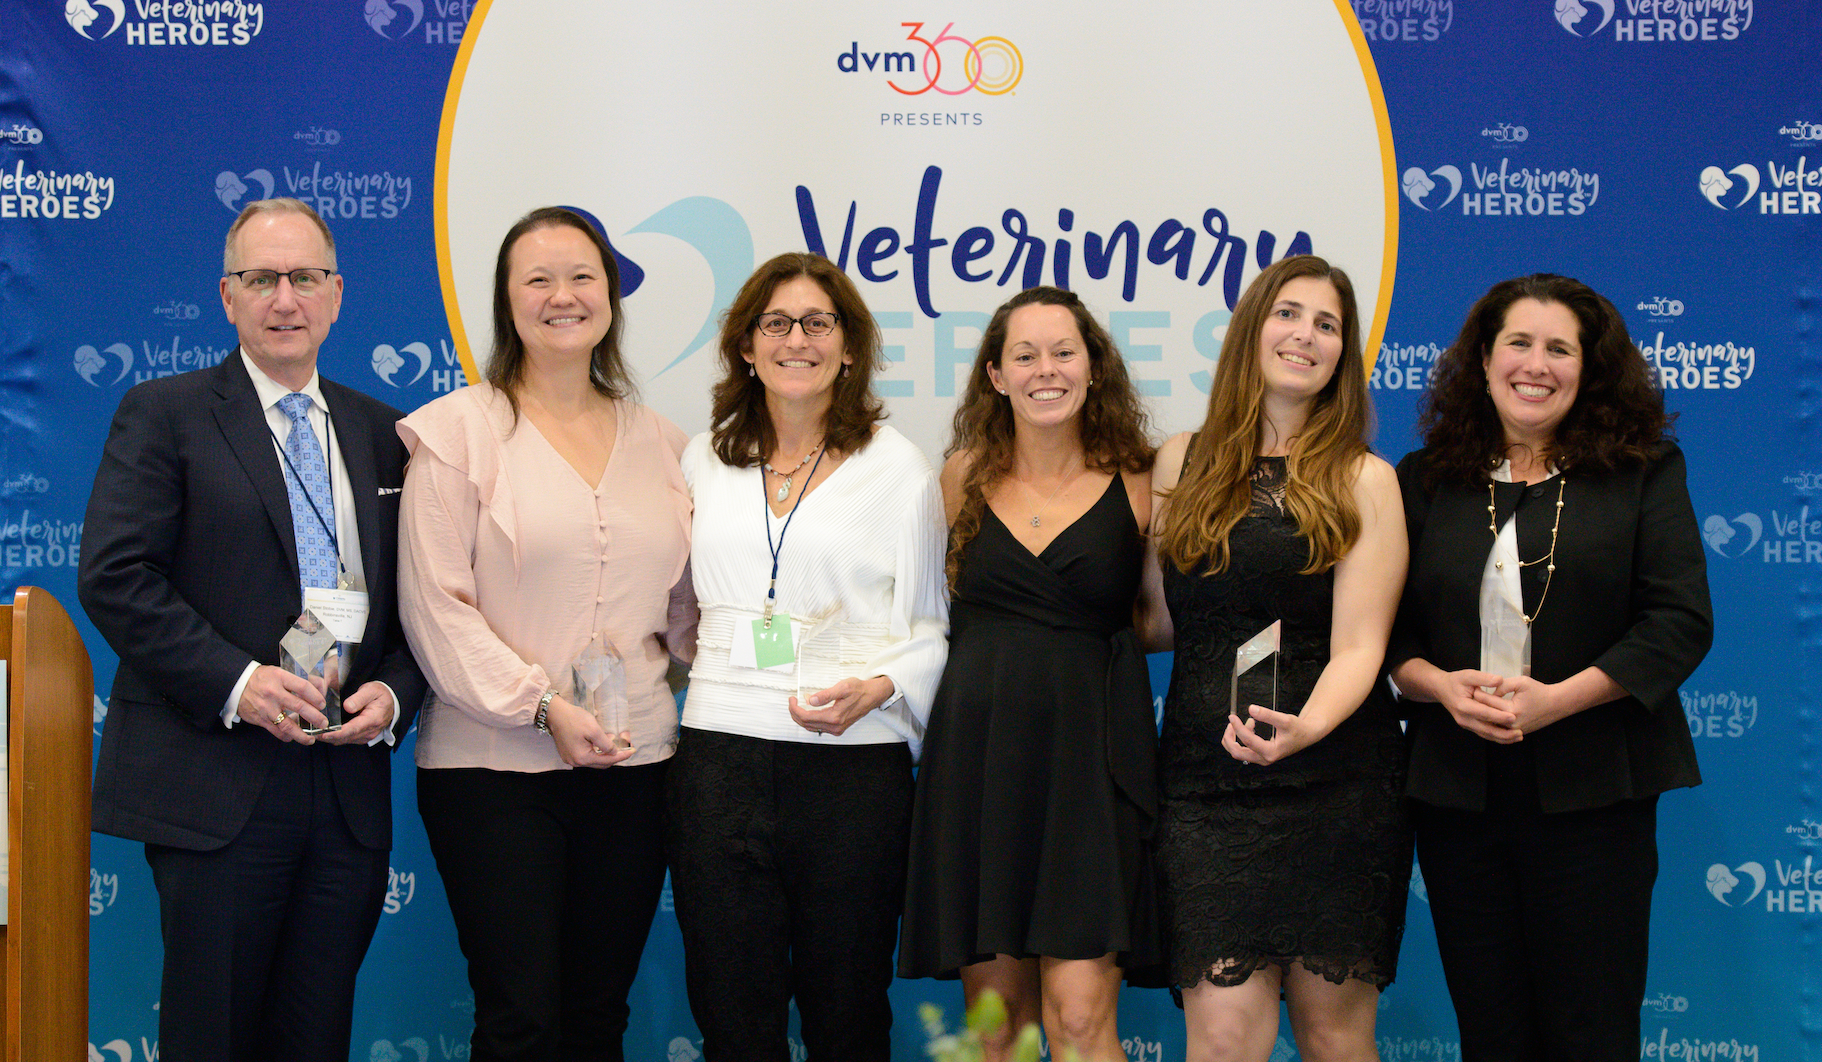 Veterinary HeroesTM award recipients (left to right) Daniel Stobie, DVM, MS, DACVS; Susie Martin; Charity J. Uman, MS, DVM; CPT Kelly Willard, DVM; Maria Ierace, DVM, DACVD; and Caeley J. Melmed, DVM, DACVIM (SAIM) were honored Wednesday during a celebration gala at the San Diego Convention Center. dvm360® also recognized Veterinary HeroesTM winners Curtis Wells Dewey, DVM, MS, DACVIM (Neurology), DACVS, CTCVMP, CCRP; and Inger Reres, LVT, VTS (SAIM).